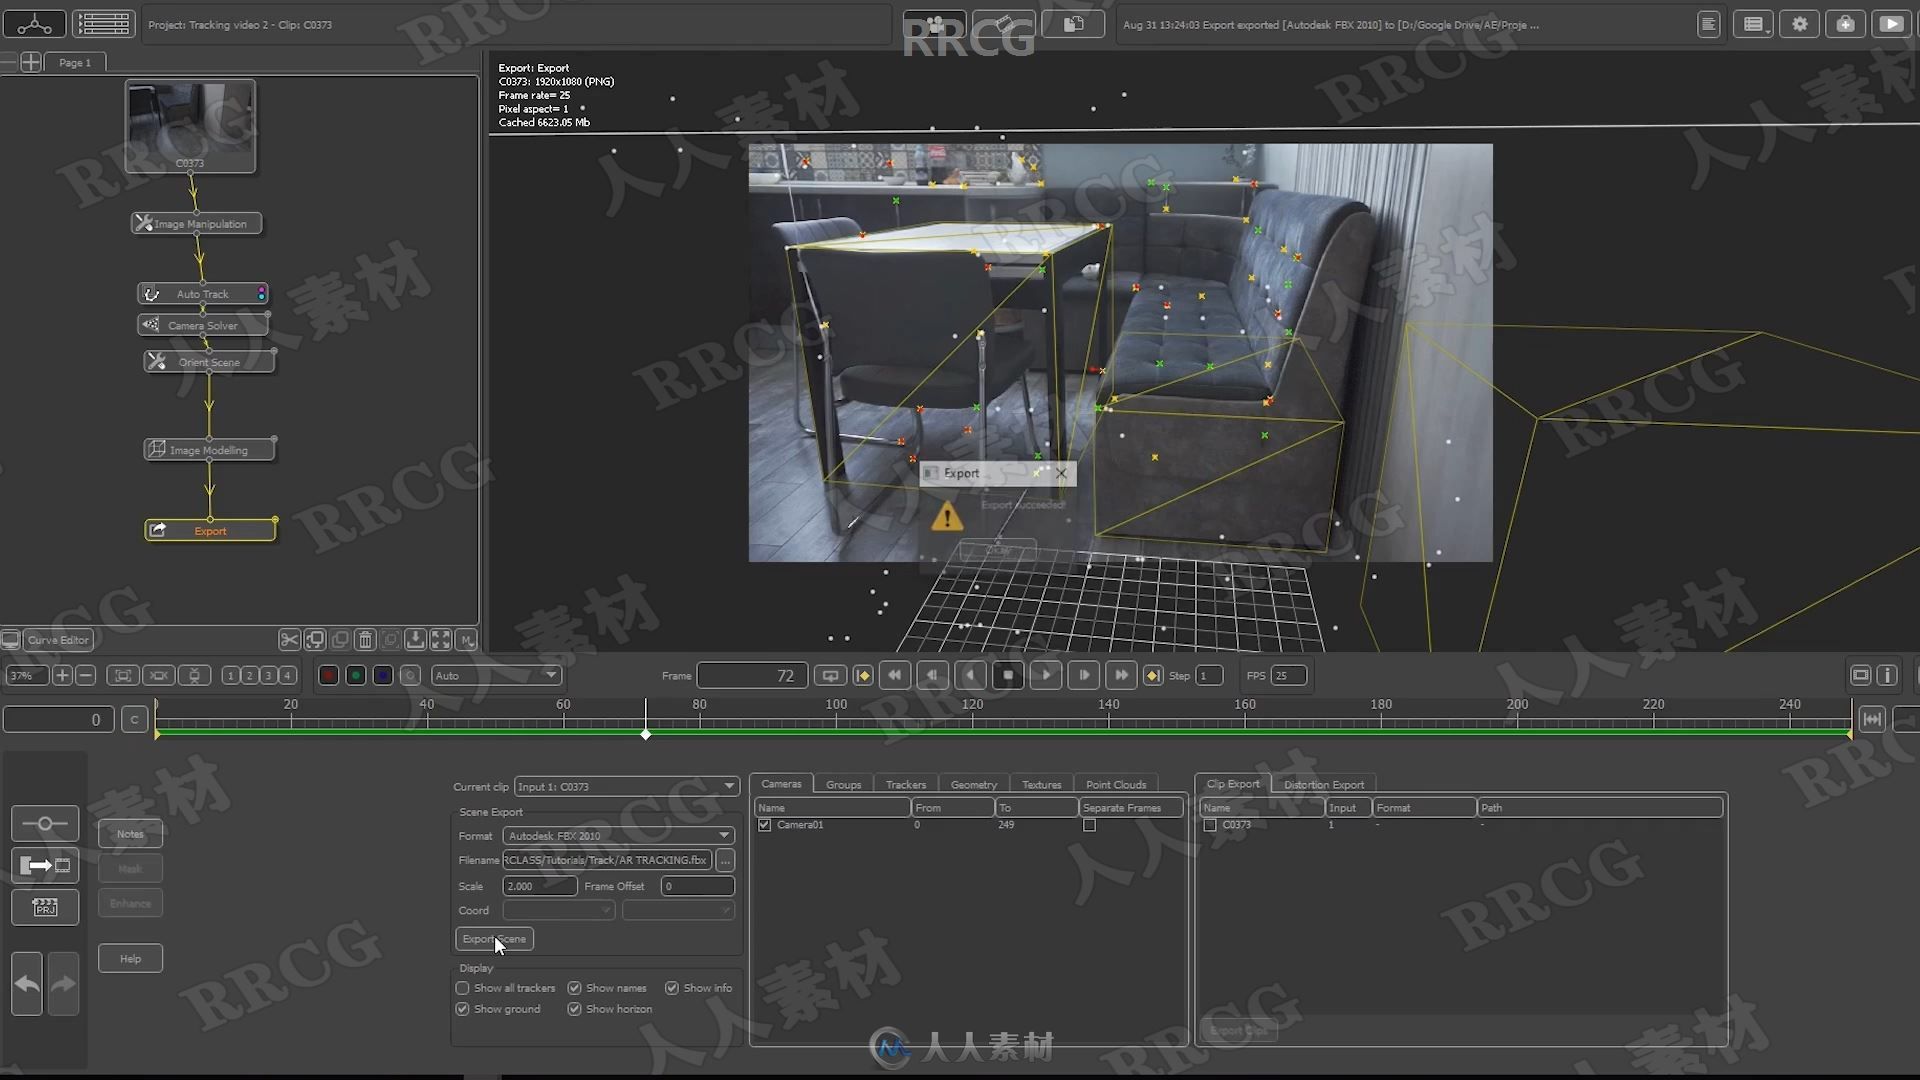 C4D与AE制作AR增强现实真实场景工作流视频教程